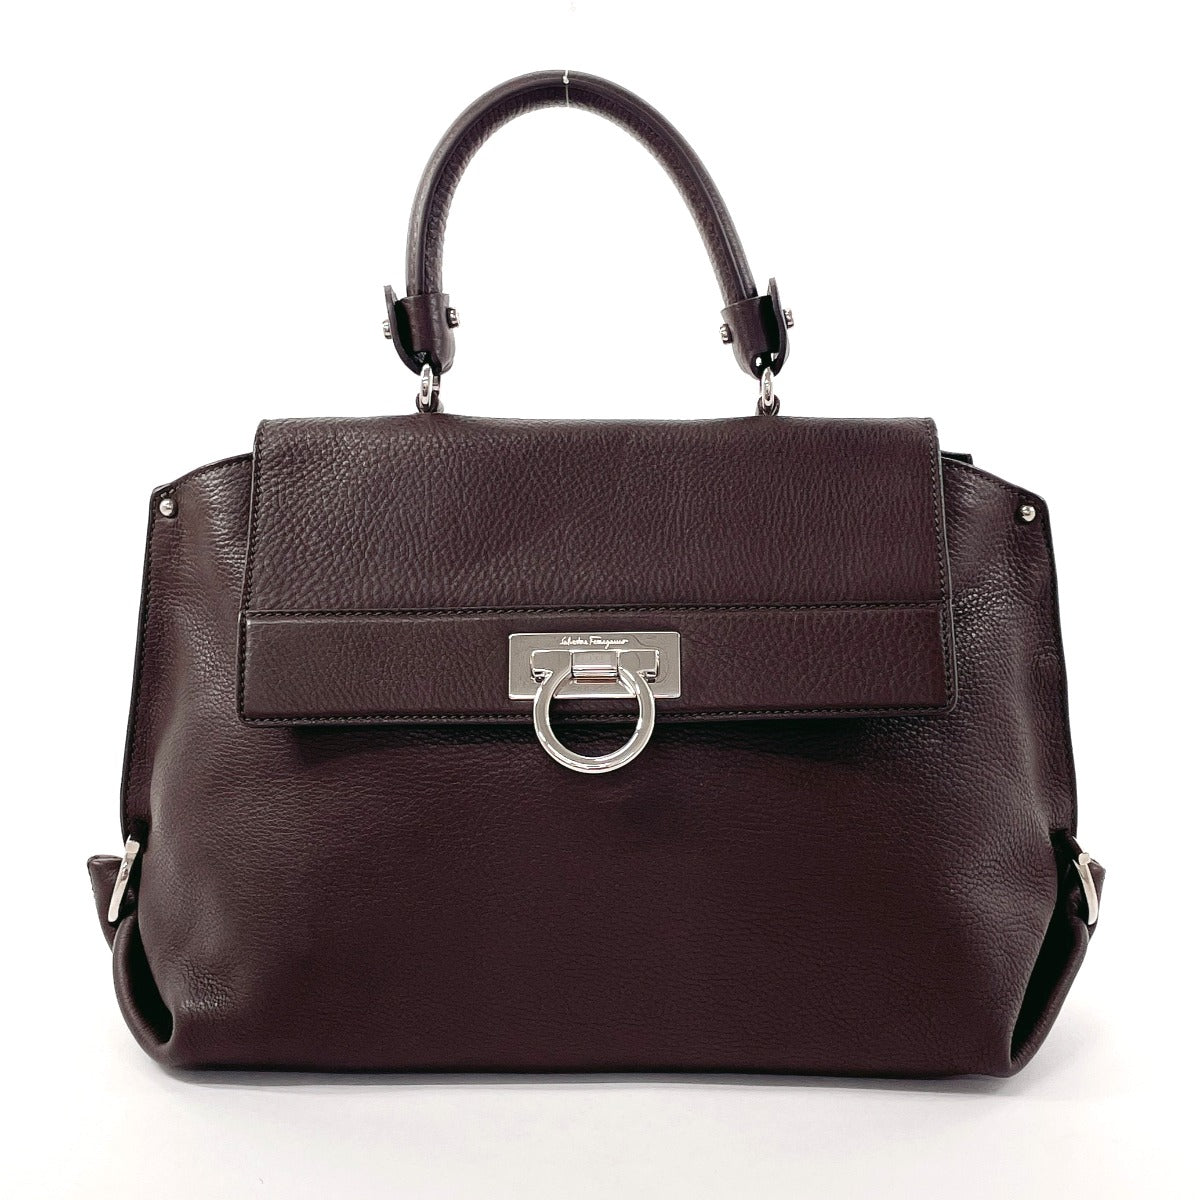 Salvatore Ferragamo Handbag Sofia Gancini leather BW-21 A896 Dark brow –  Japan second hand luxury bags online supplier Arigatou Share Japan